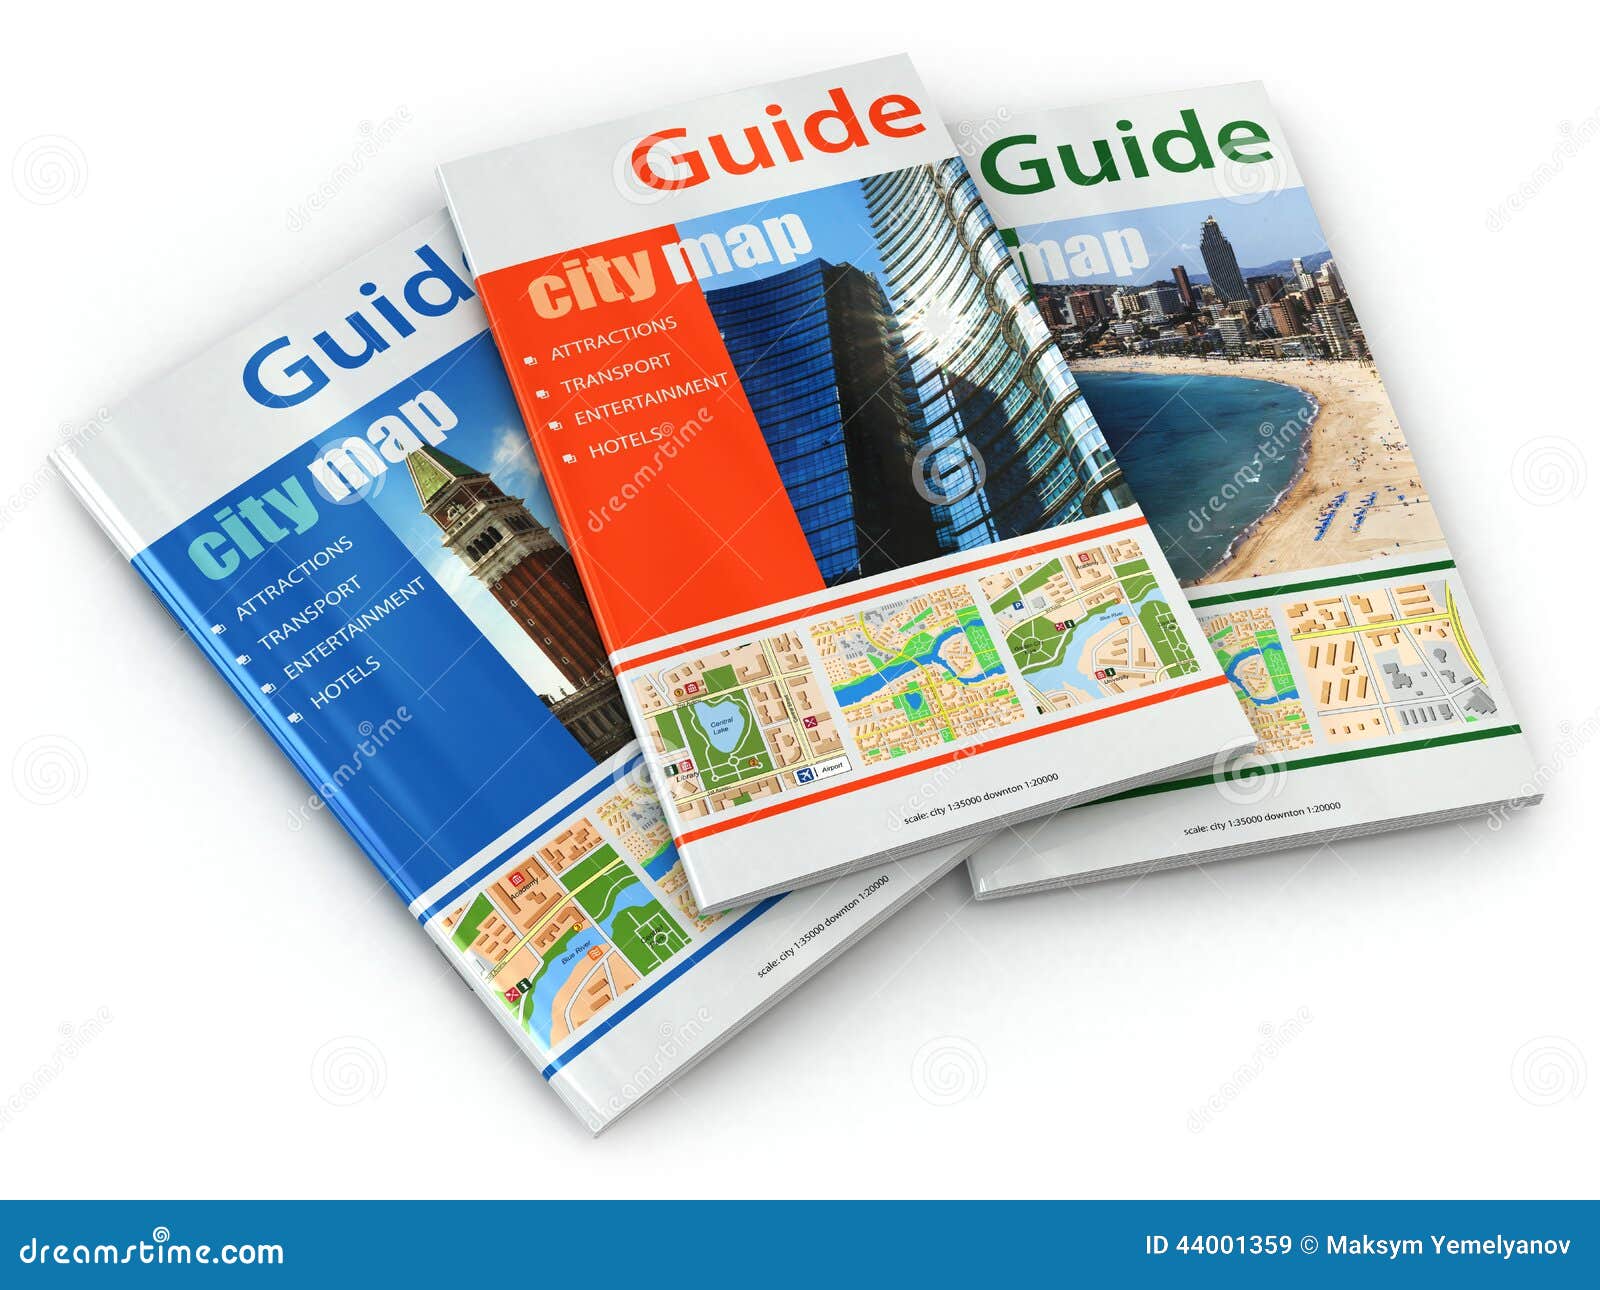 Travel Guide Books. Stock Illustration - Image: 44001359